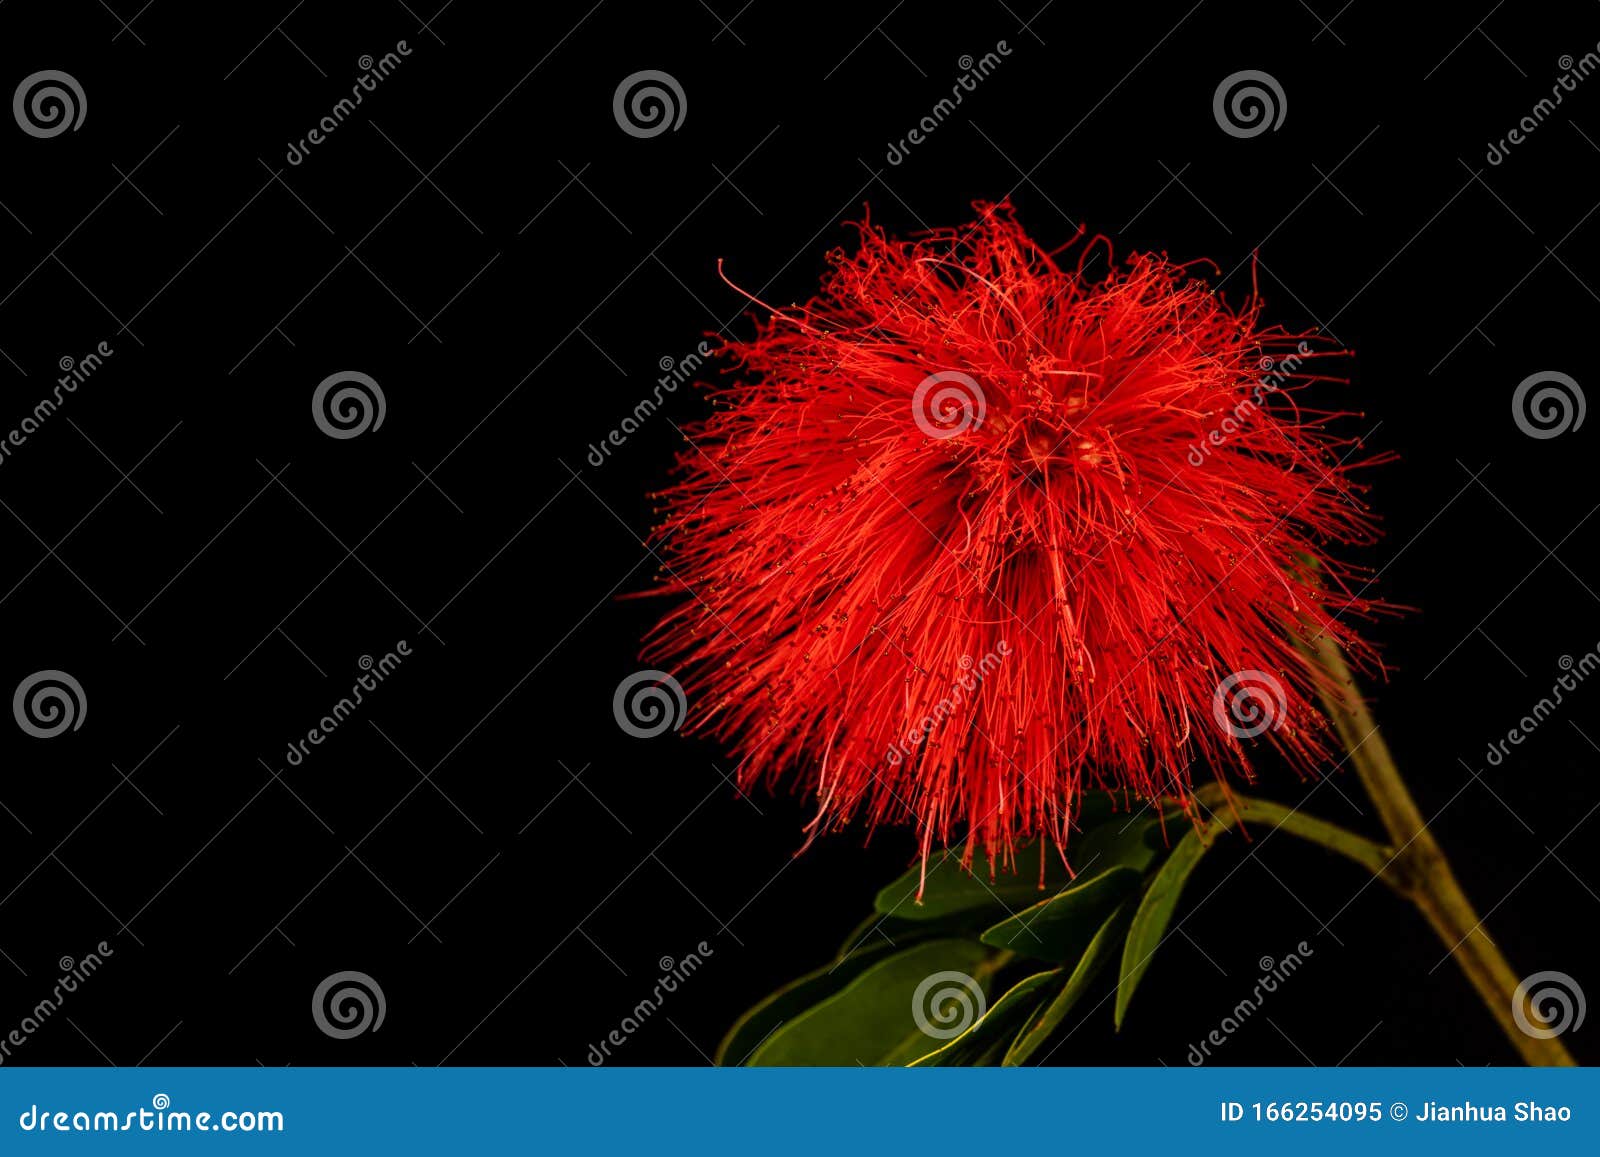 Red Bottle Brush Flower With Black Background Stock Image - Image of ...